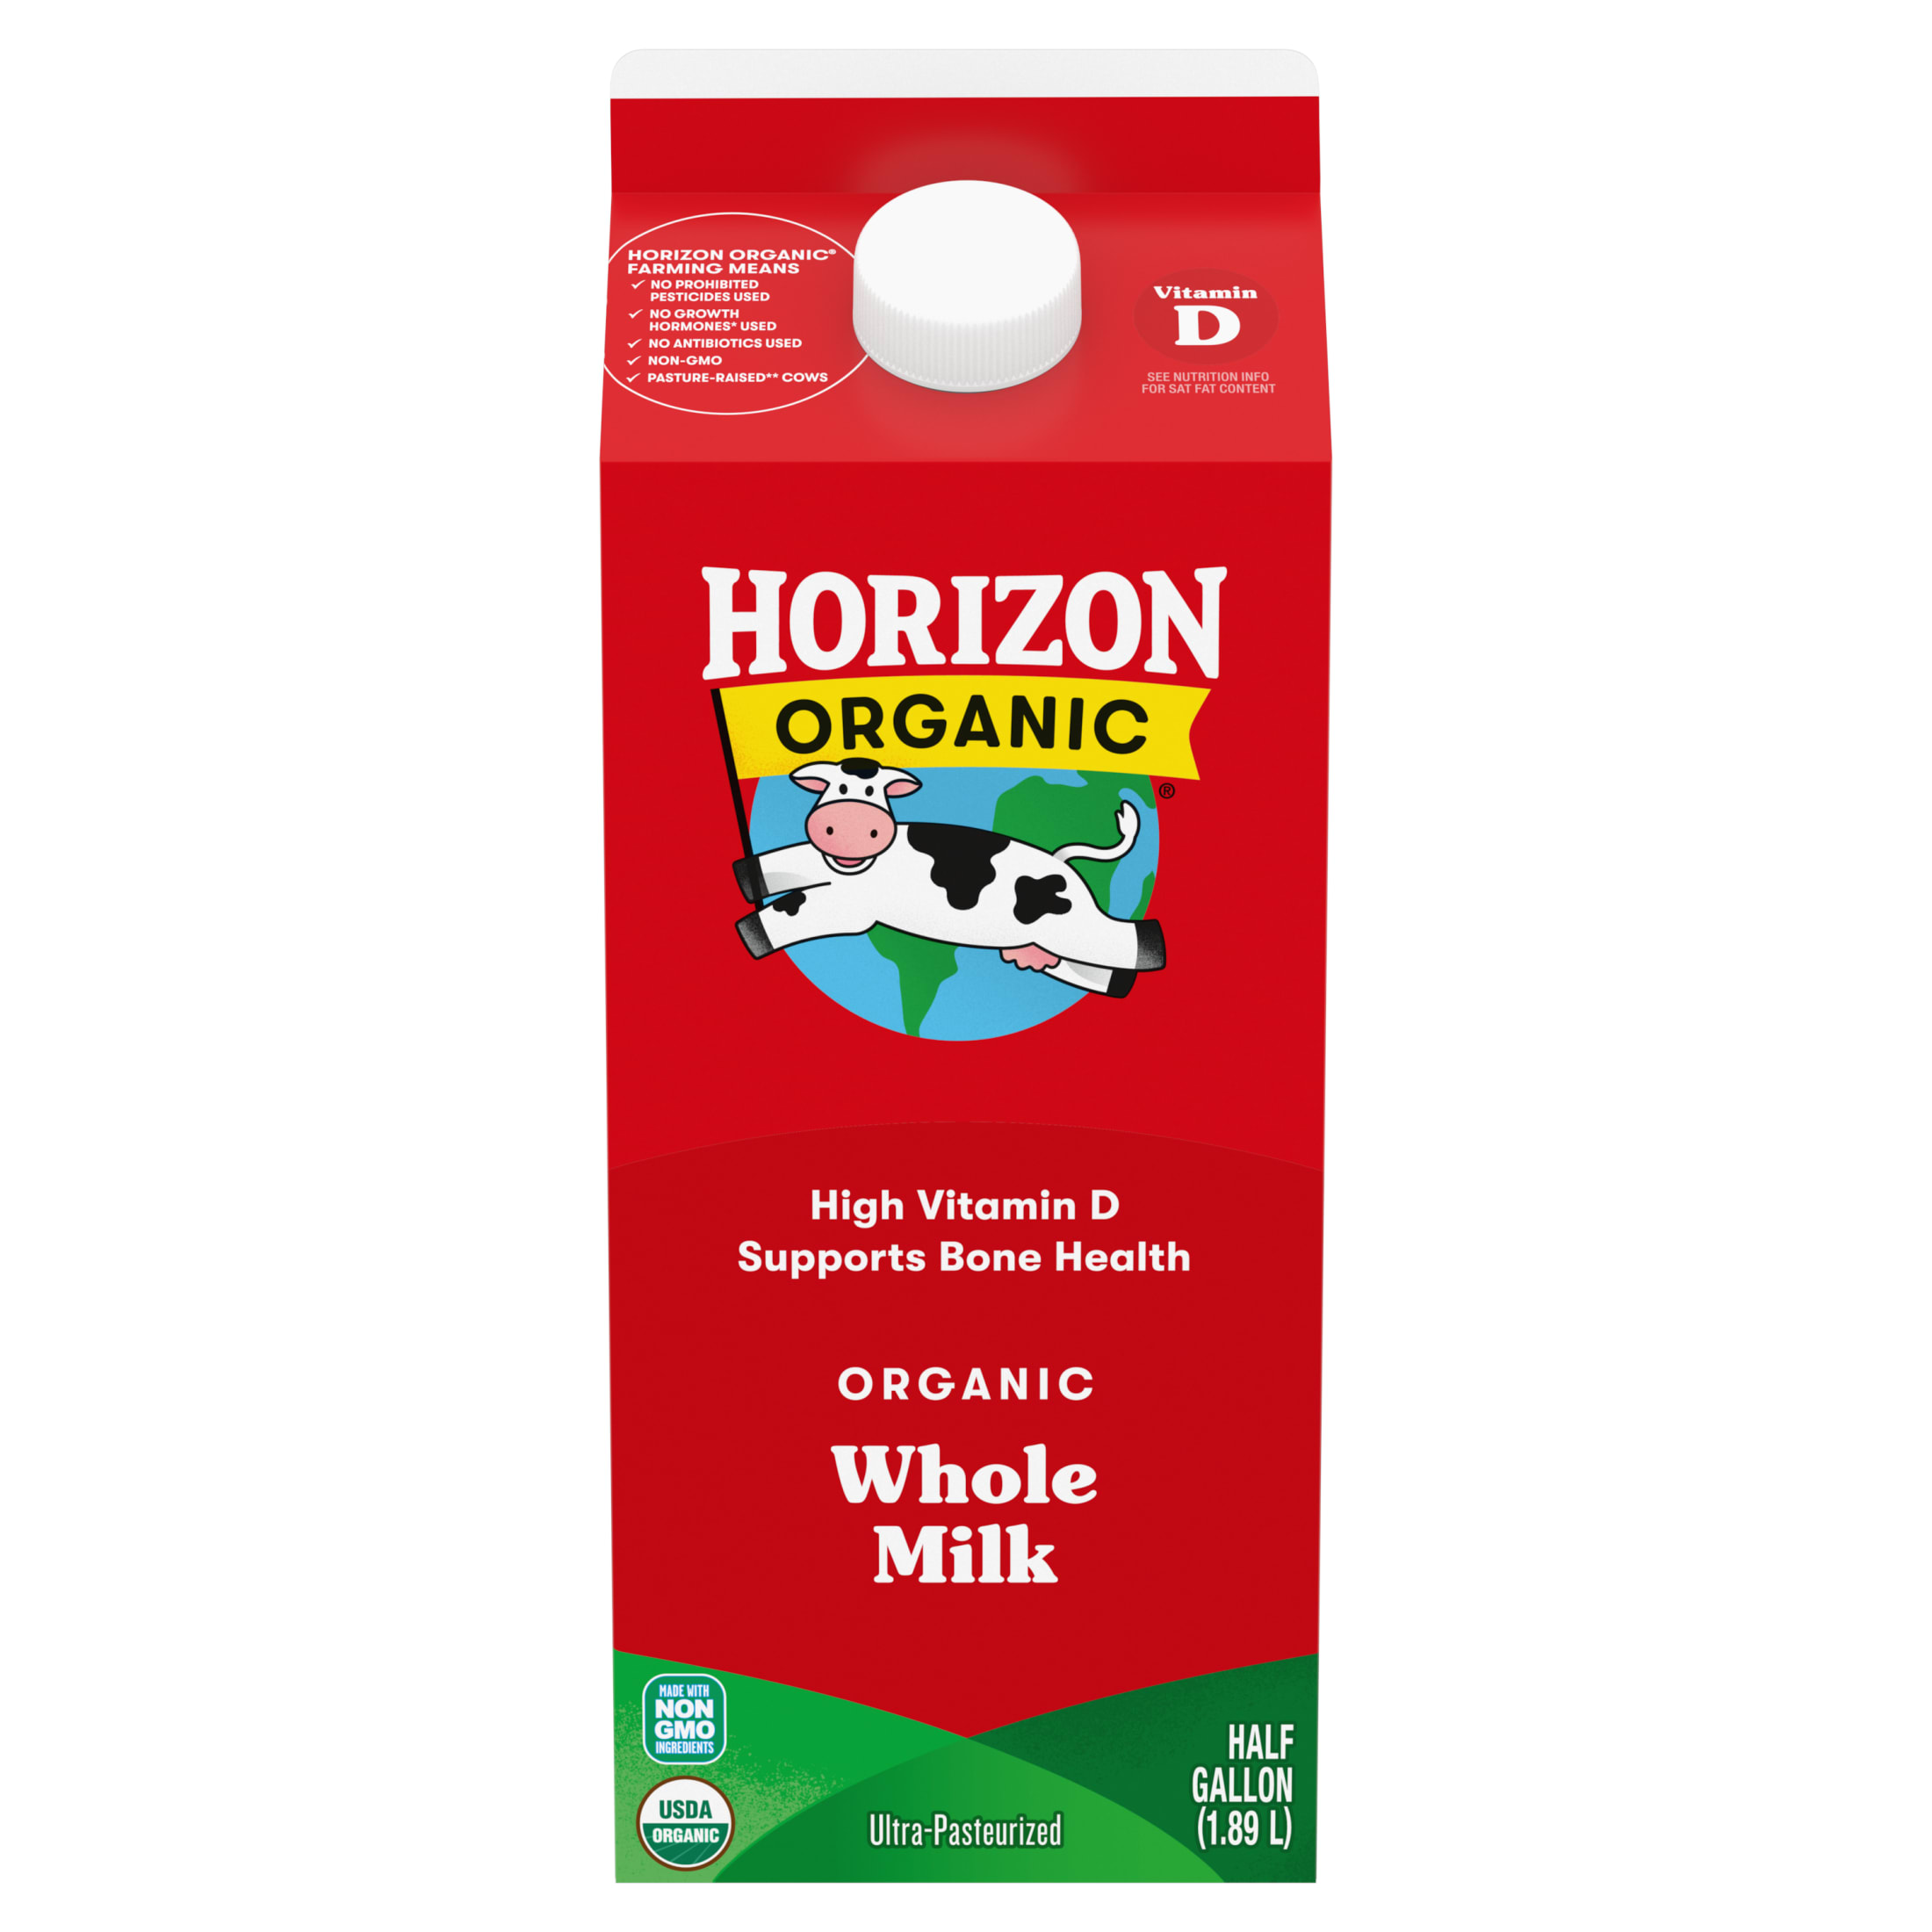 Horizon Organic High Vitamin D Whole Milk, High Vitamin D Whole, 64 fl oz Carton - image 1 of 15